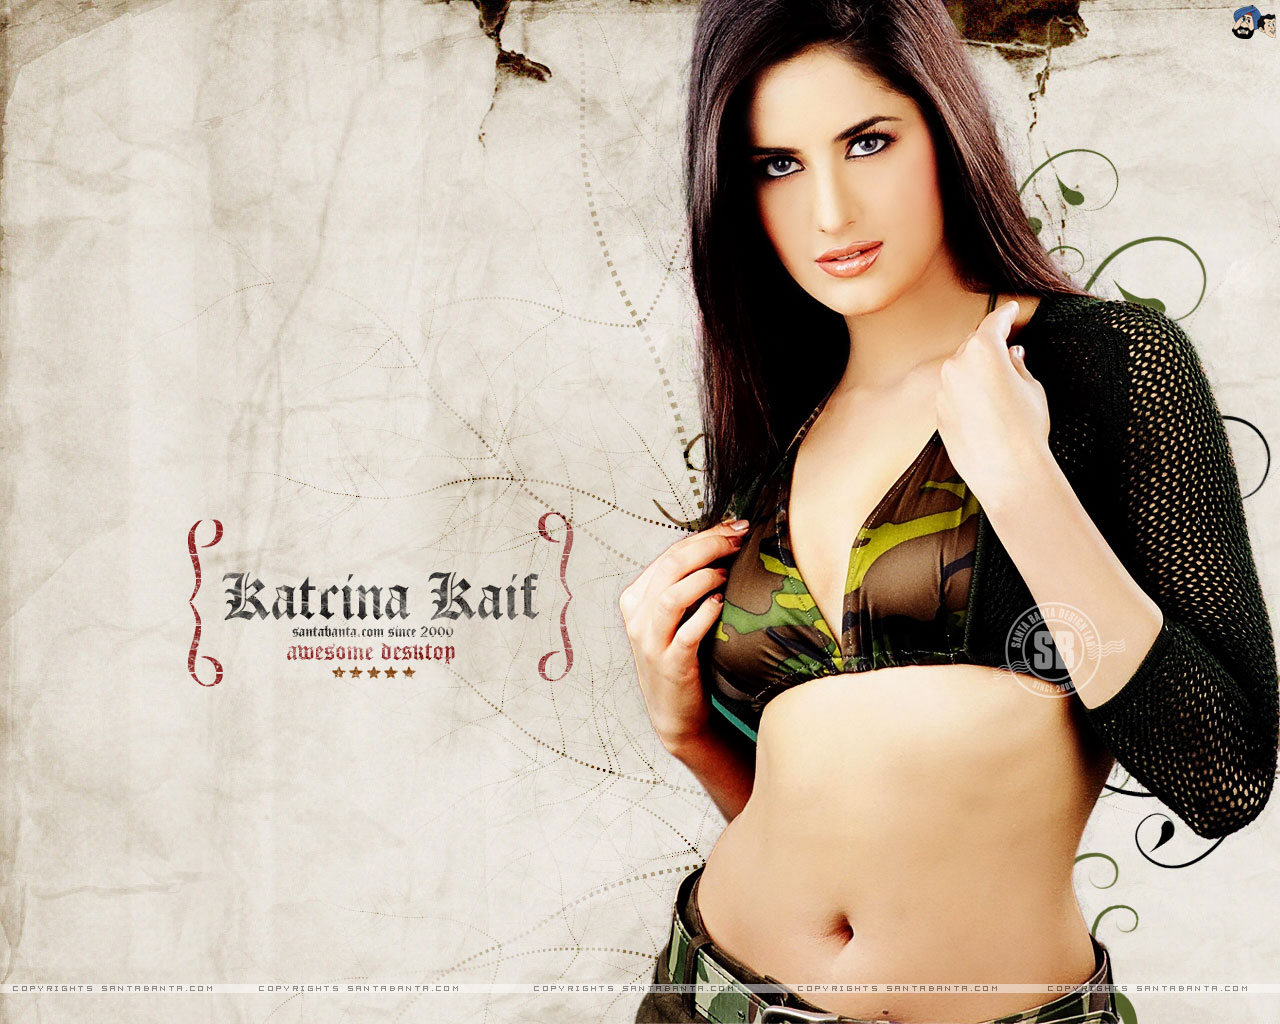 Katrina Kaif Wallpaper Beautiful